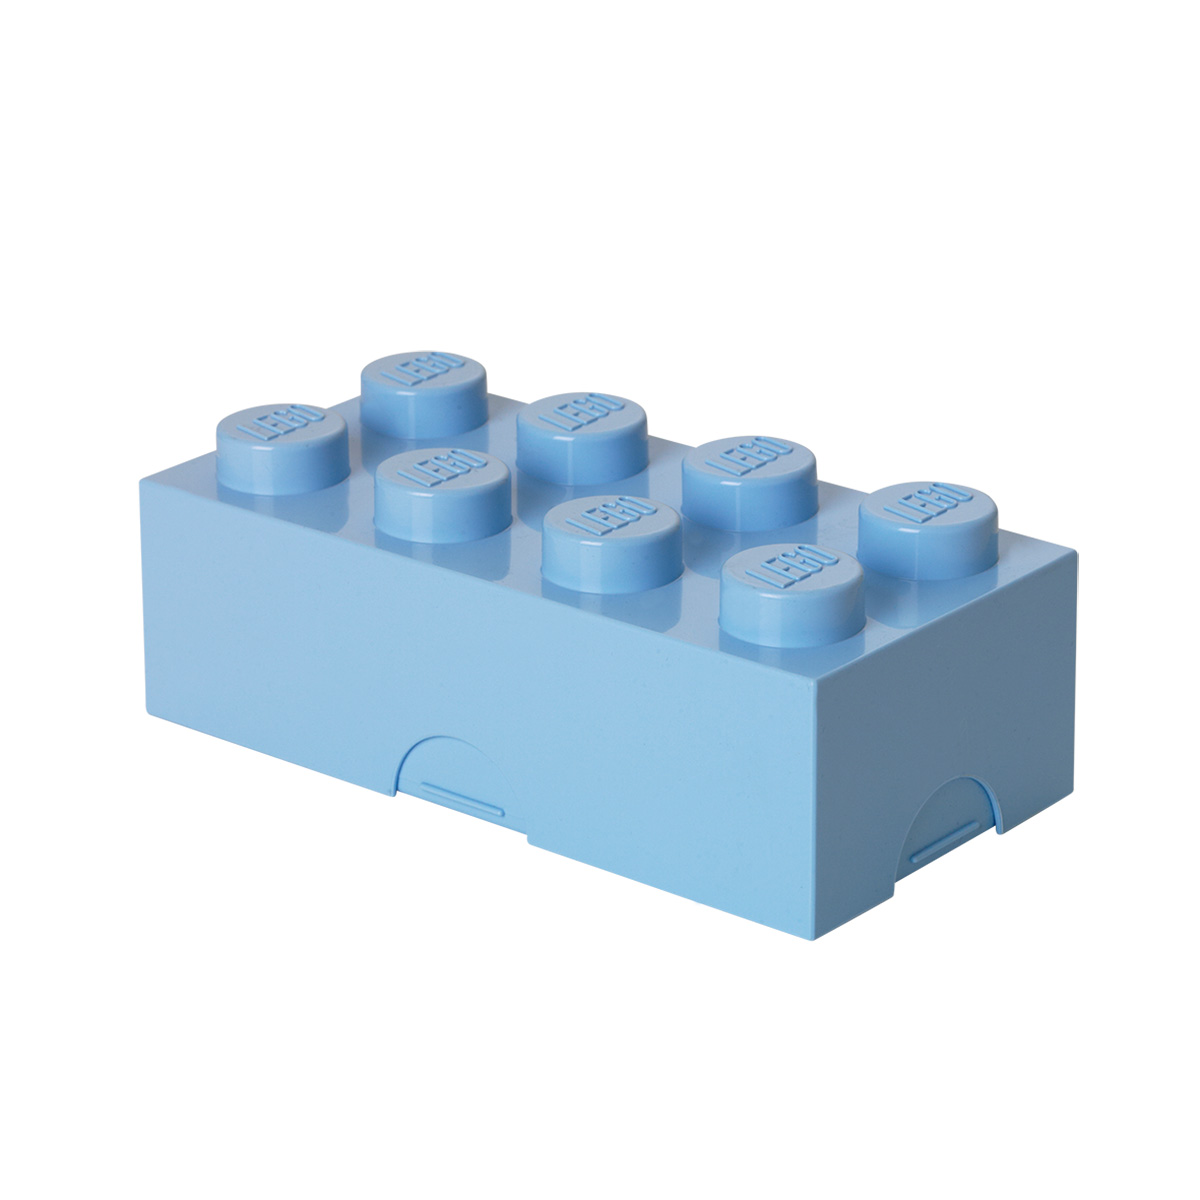 https://nh-g.com/wp-content/uploads/2022/05/40121736-LEGO-Classic-Box-Light-Royal-Blue.jpg